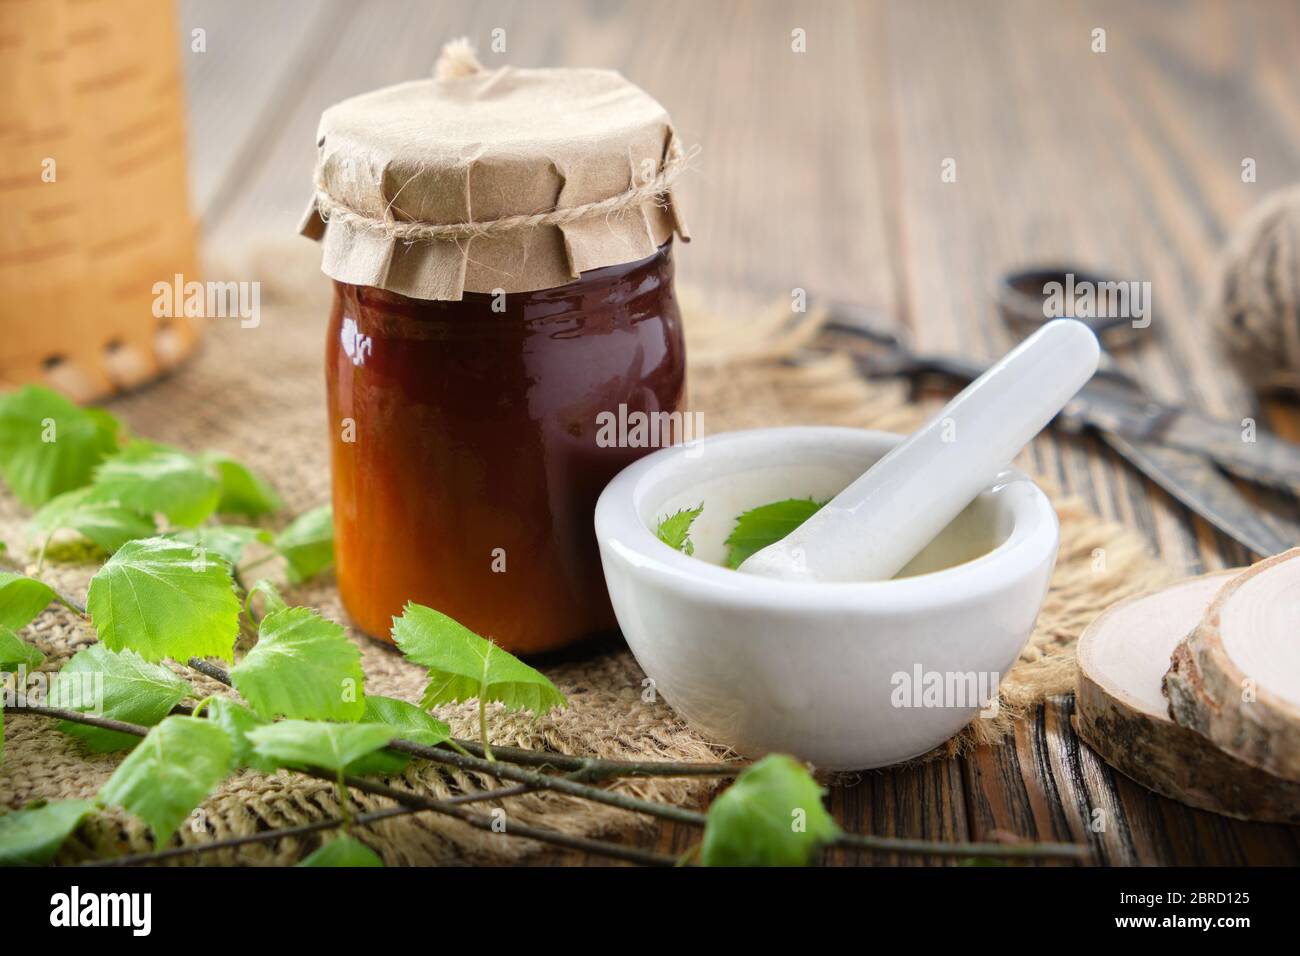 Bottle of birch herbal salve, balm or coal tar oil, healthy birch leaves, mortar on wooden table. Alternative medicine. Stock Photo